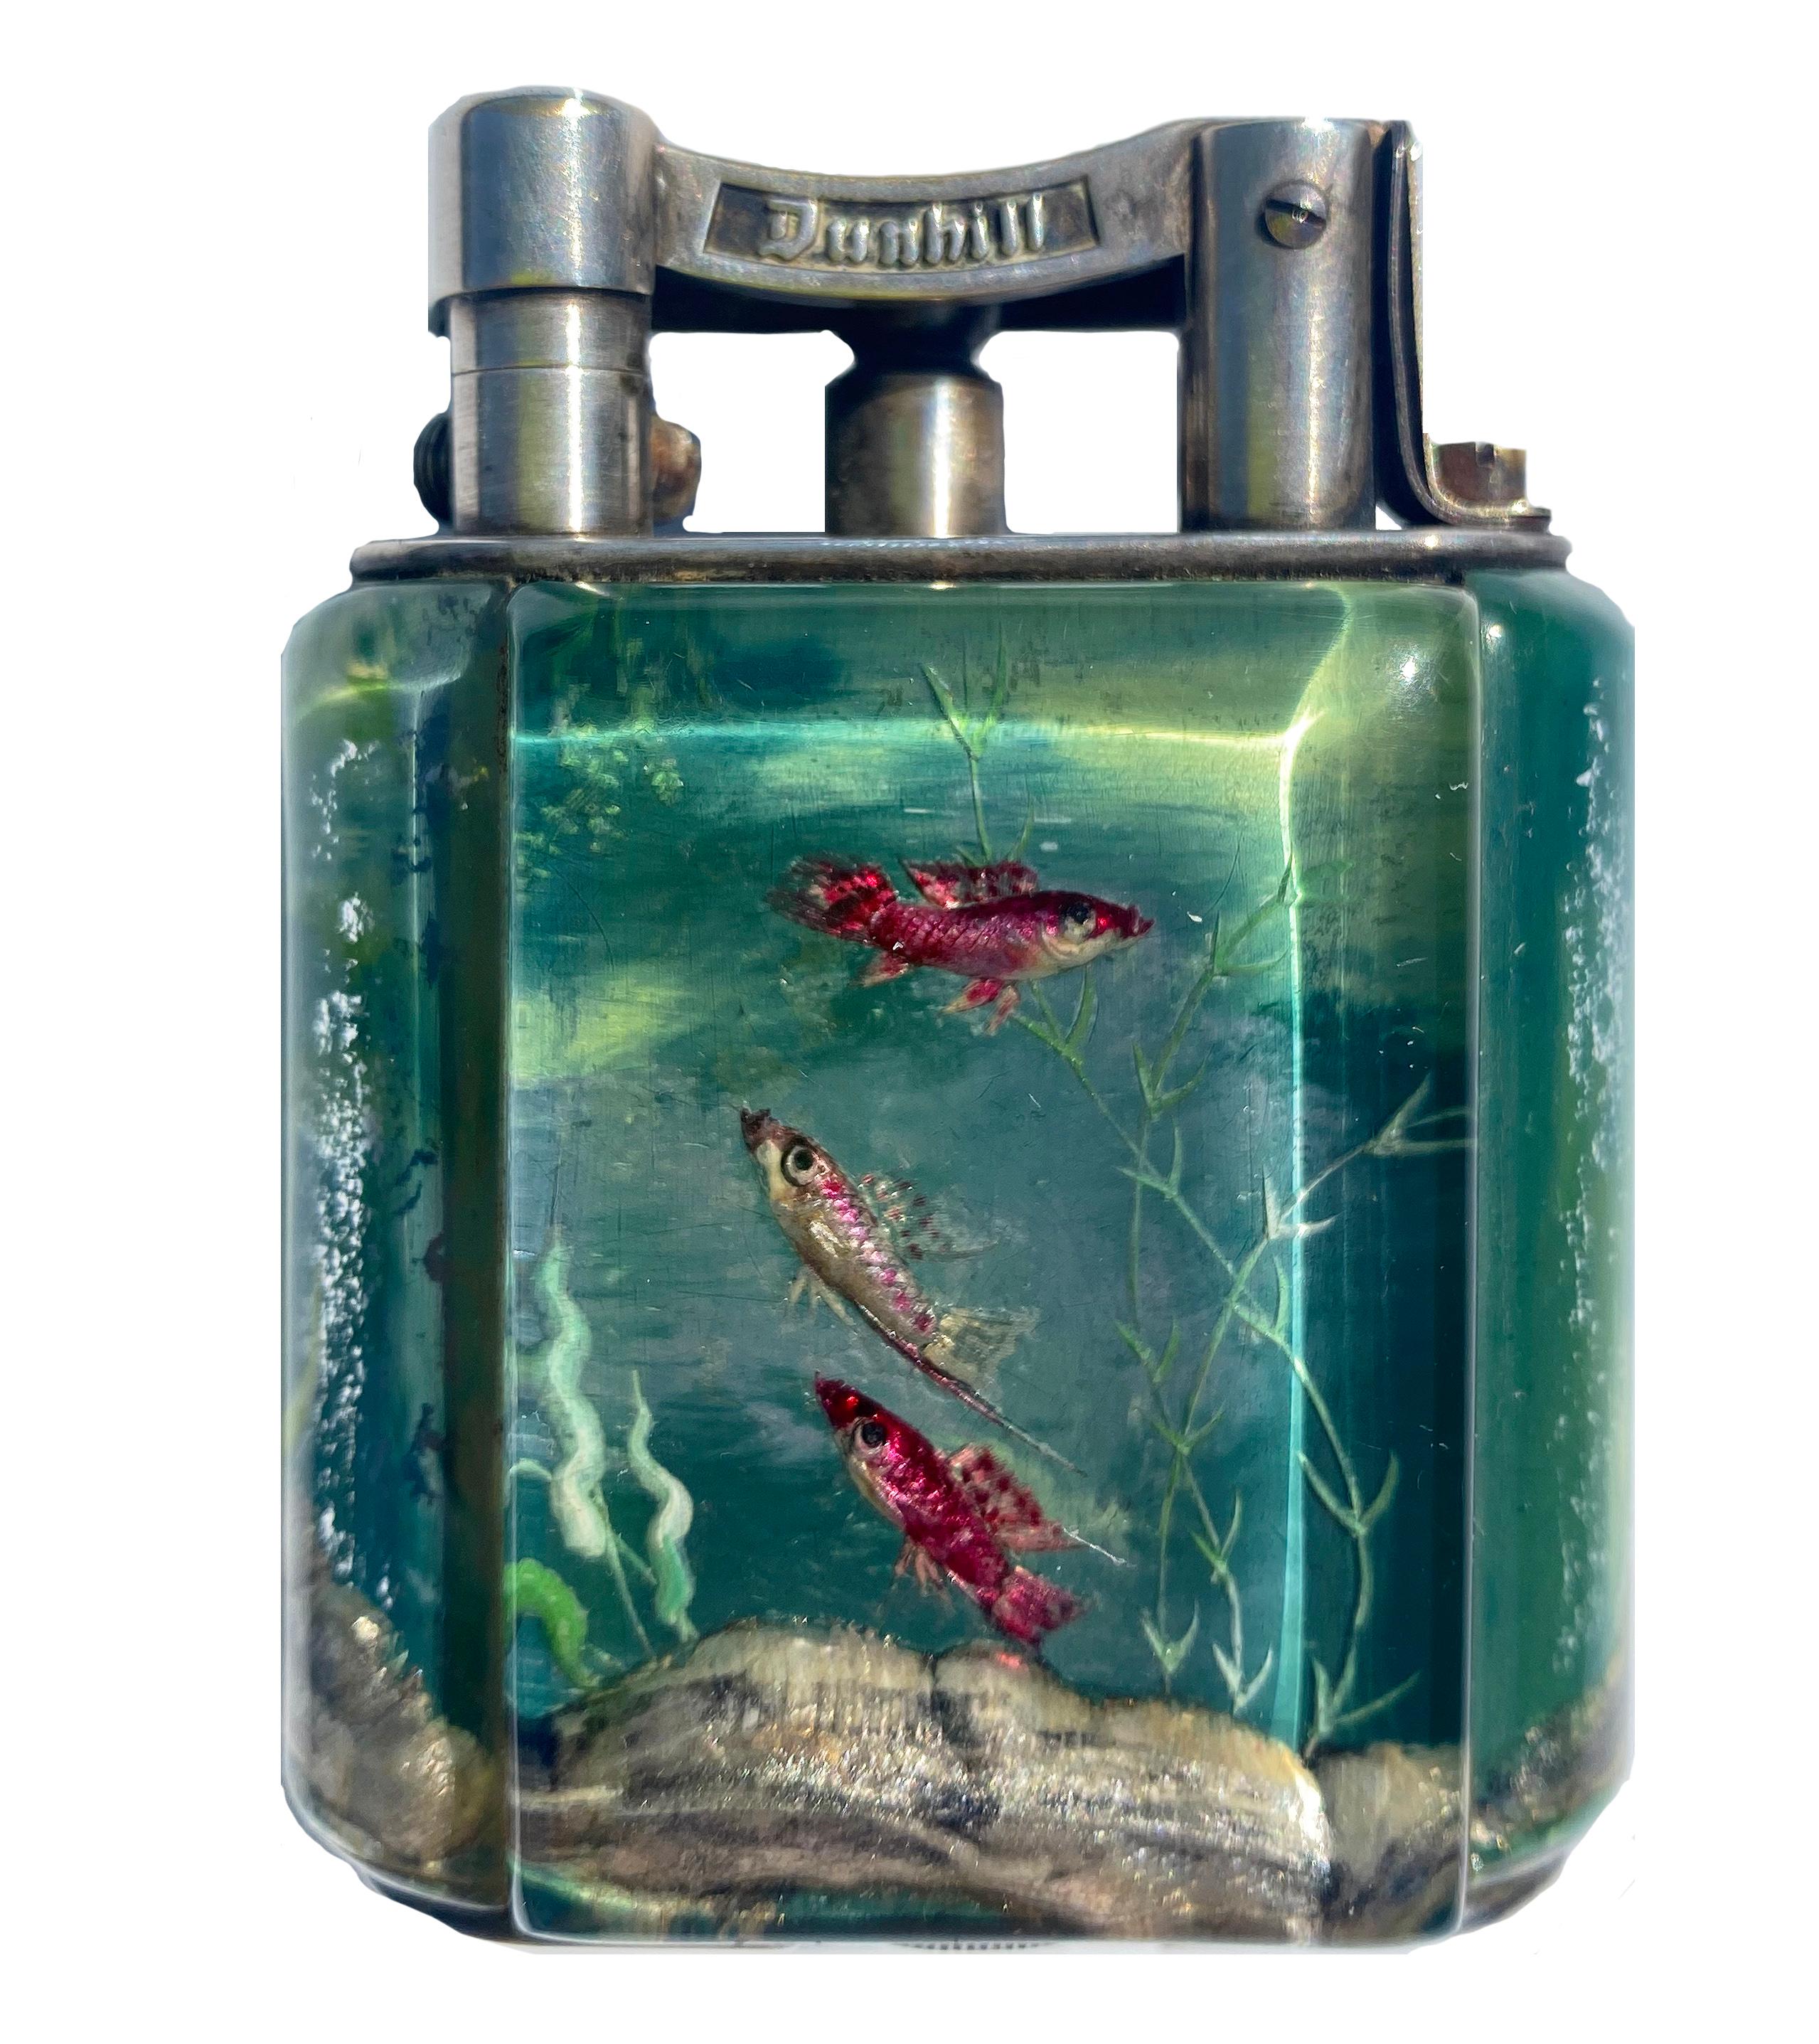 Dunhill Aquarium Lighter - Mixed Media Art by Ben Schillingford